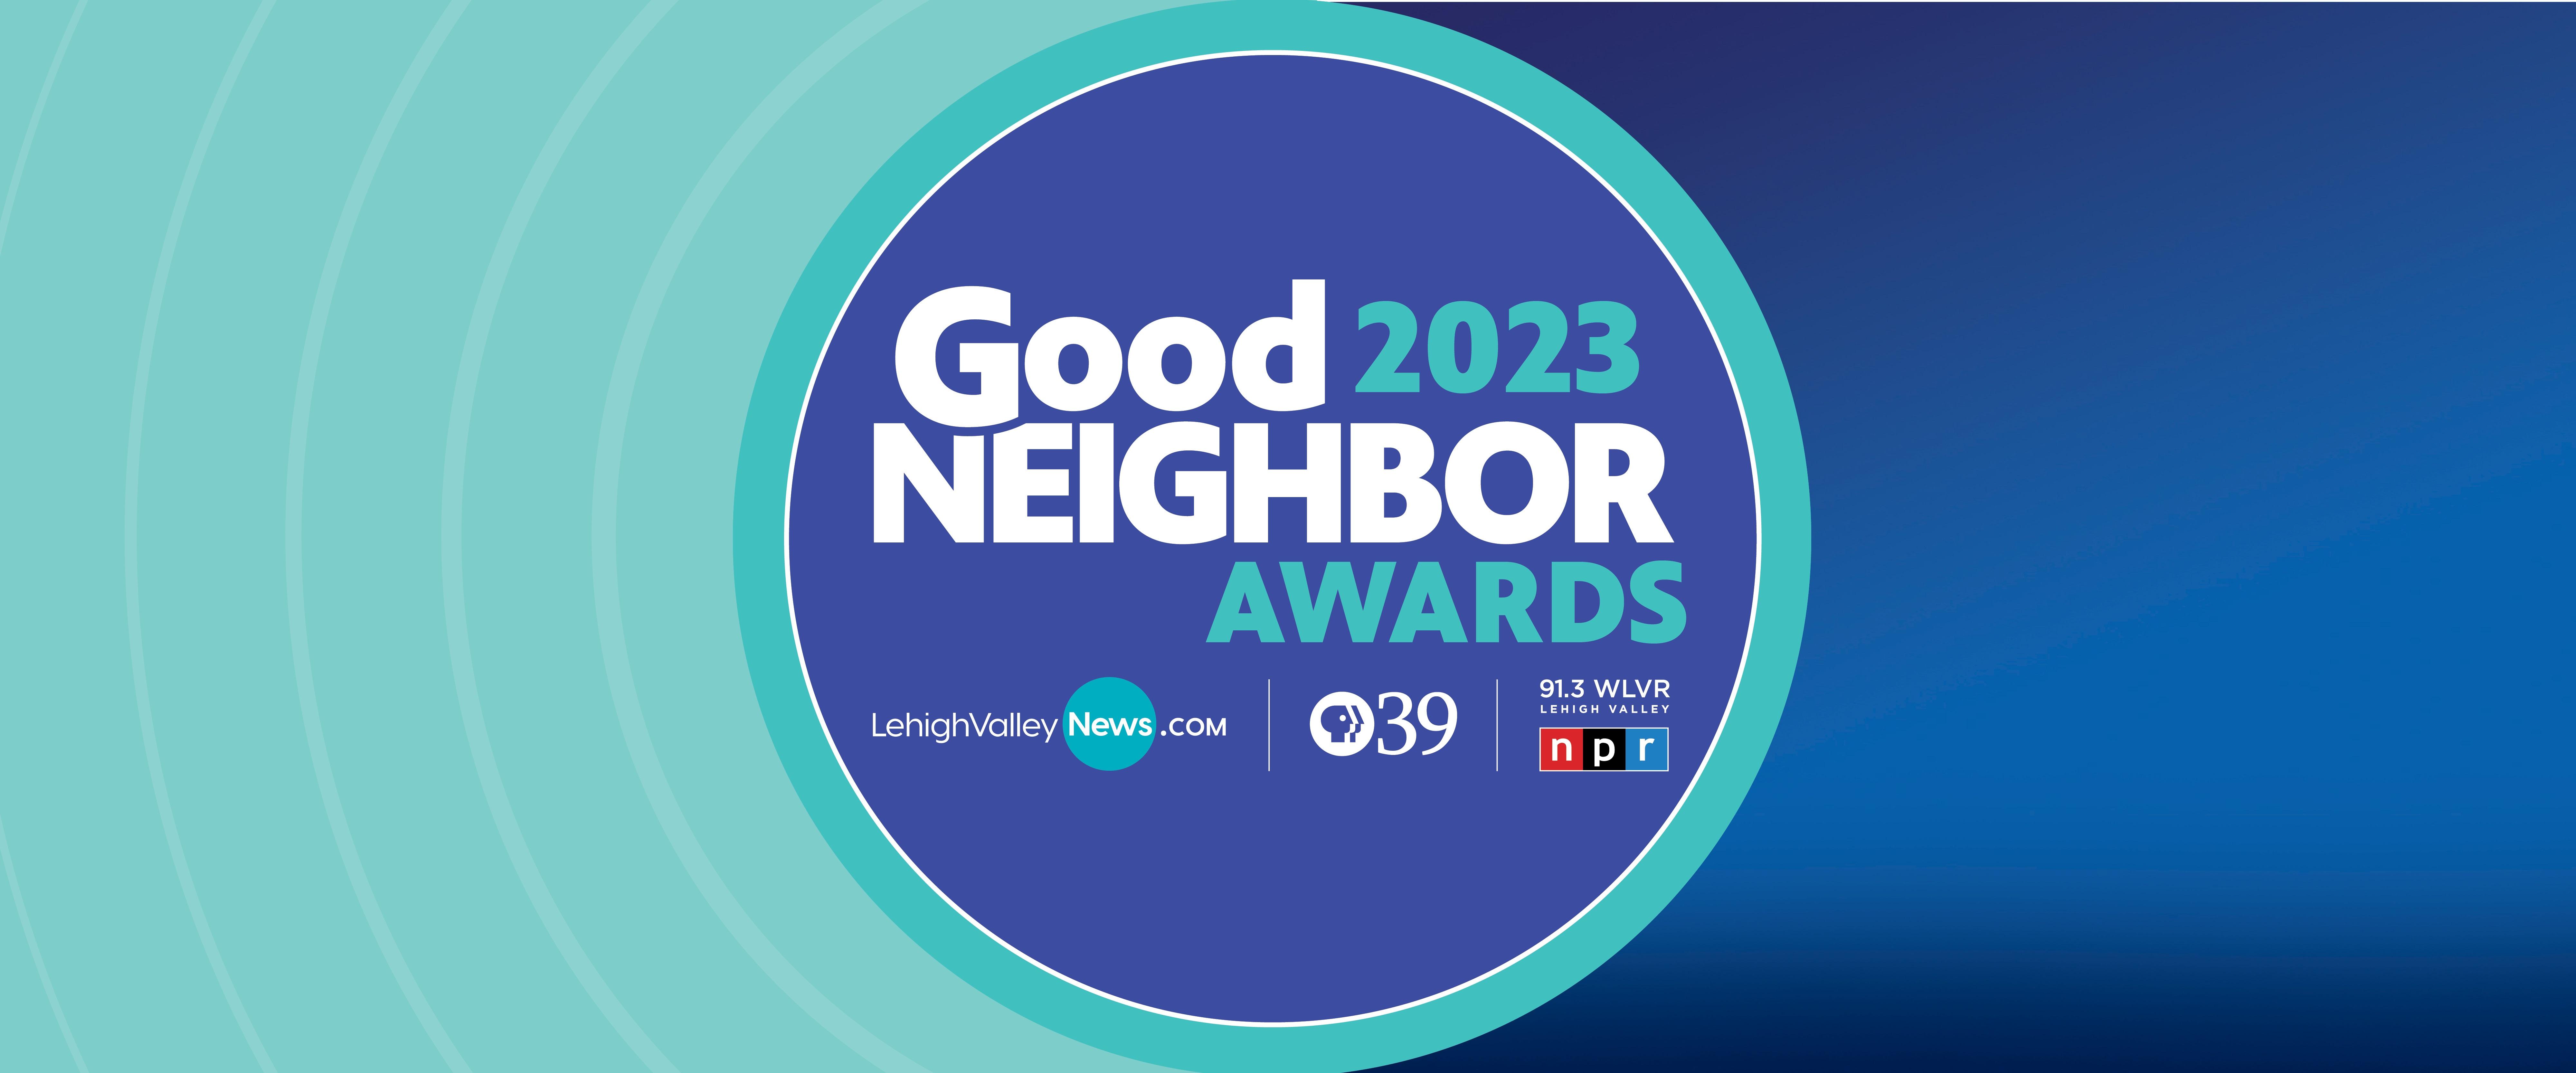 Good Neighbor Awards 2023